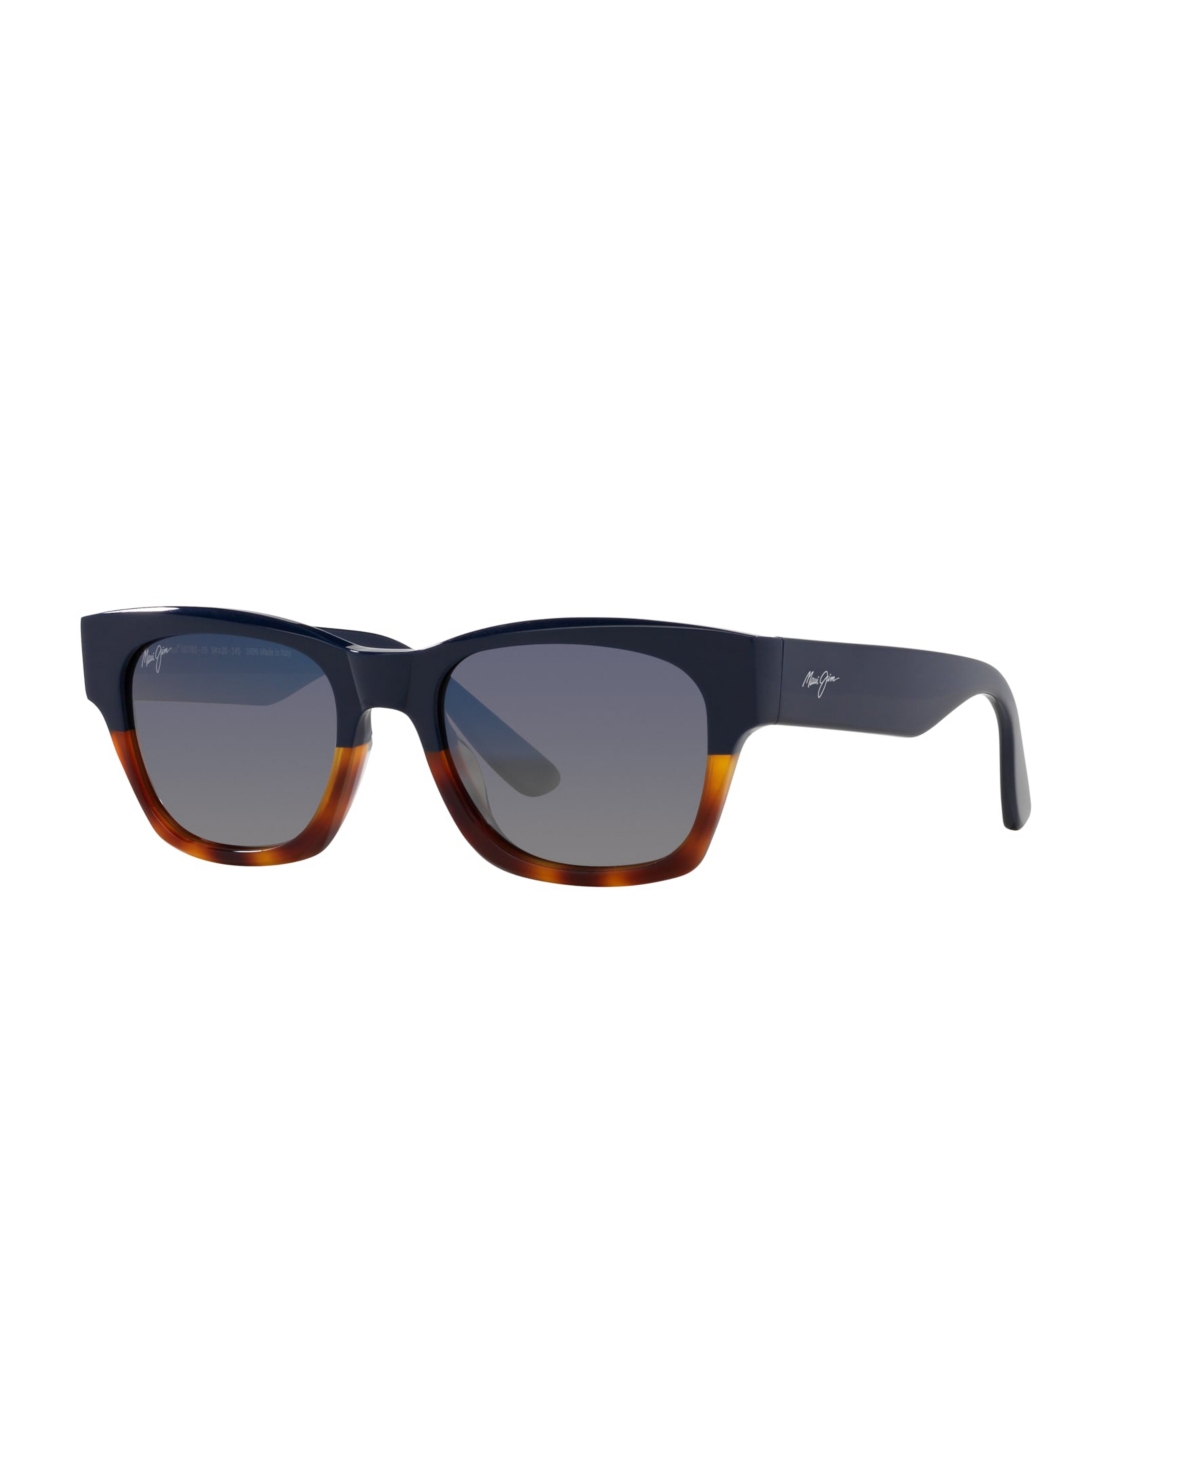 Maui Jim Unisex Polarized Sunglasses, Valley Isle Mj000734 In Blue Brown